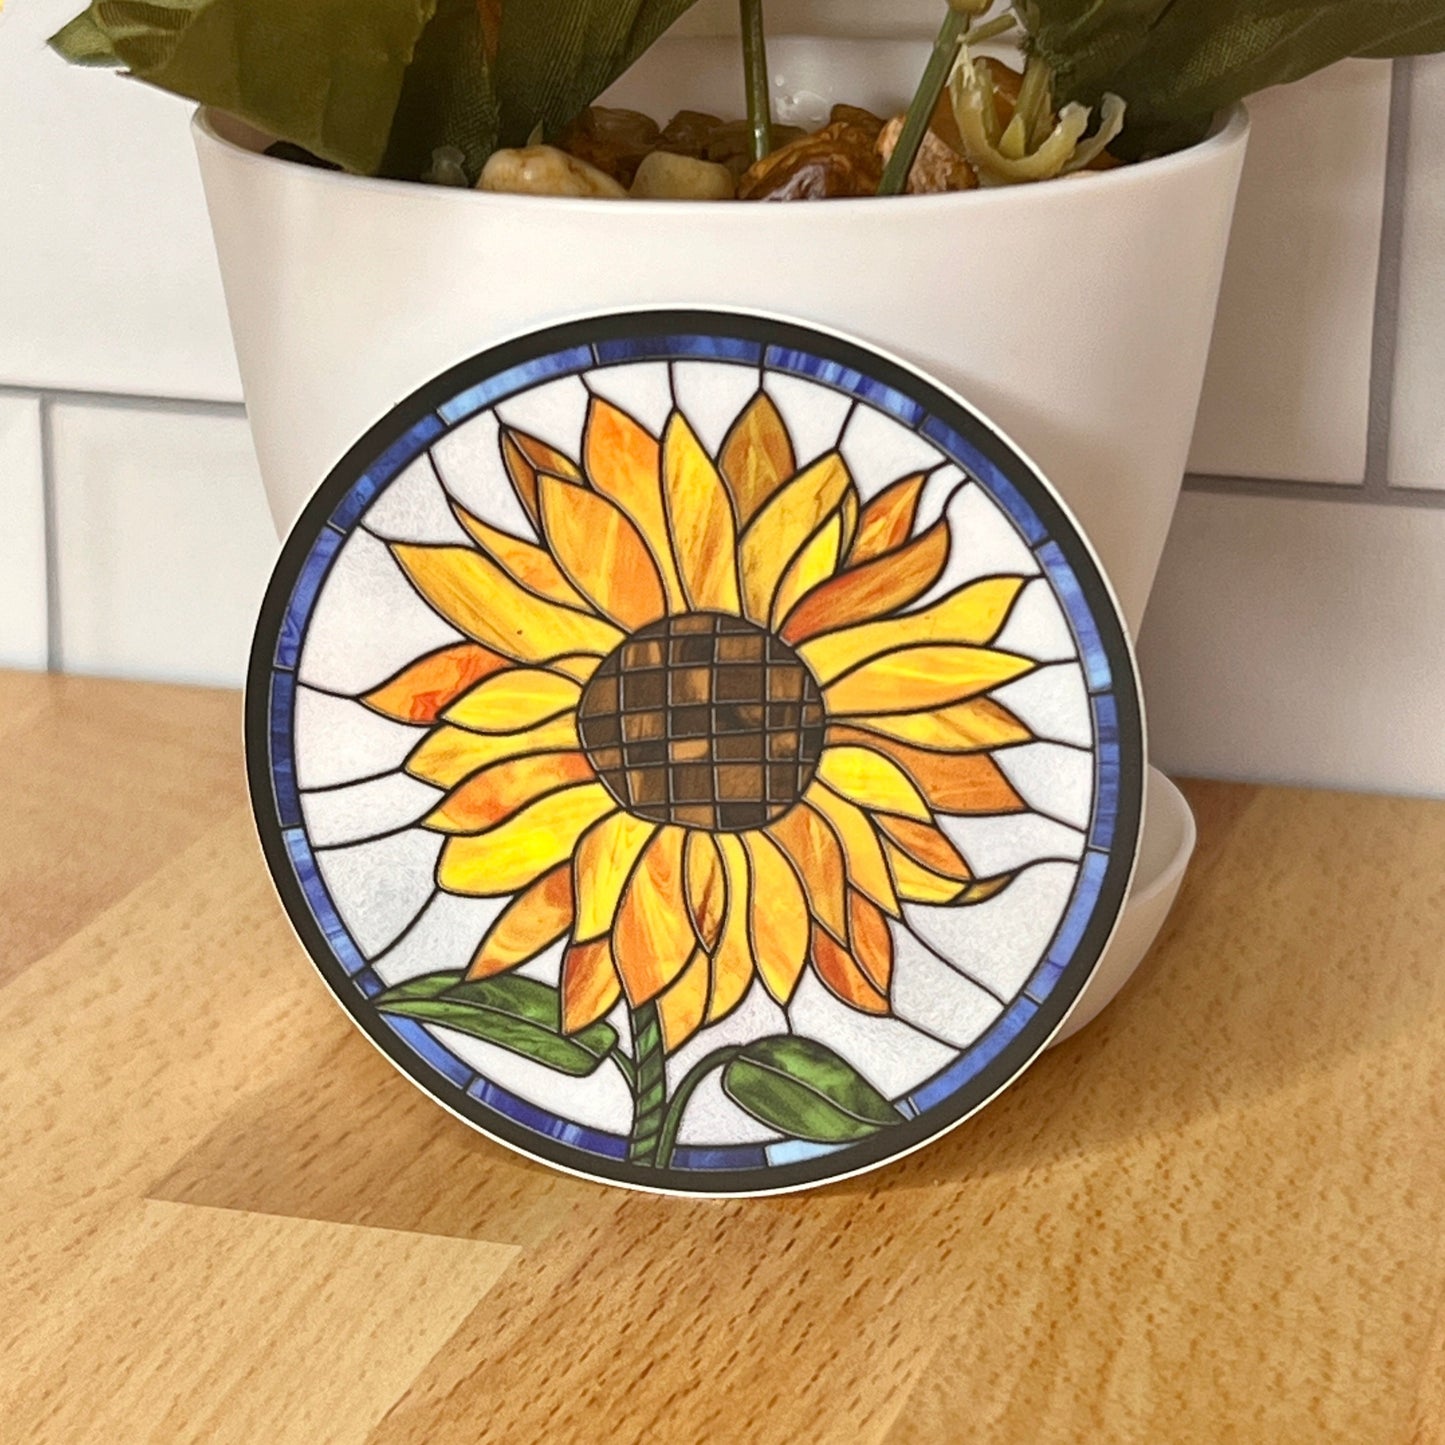 Sunflower Stained Glass Design Waterproof Sticker Decal